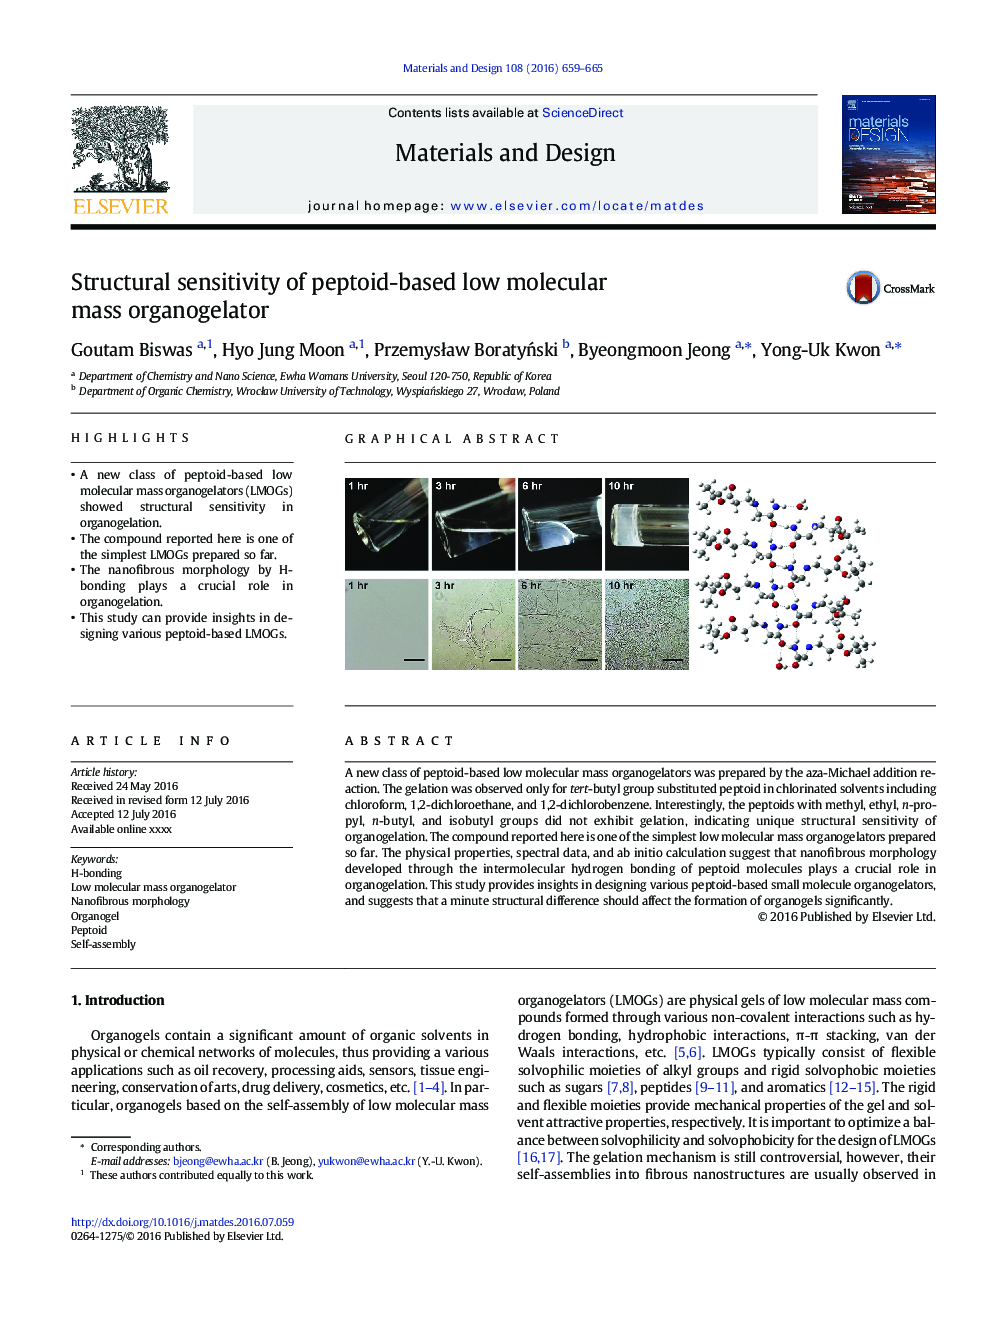 Structural sensitivity of peptoid-based low molecular mass organogelator